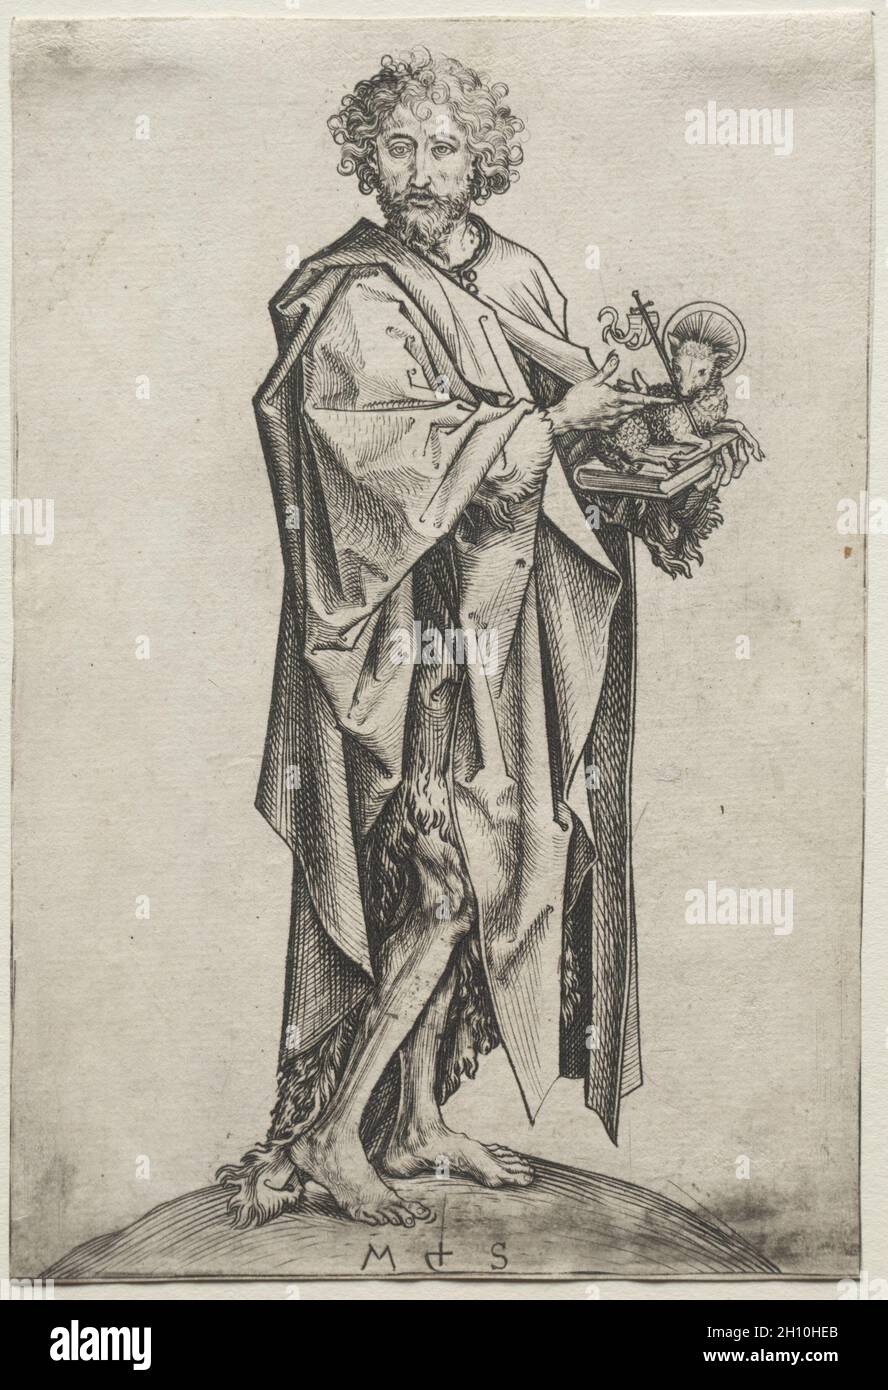 St. John the Baptist, c. 1475. Martin Schongauer (German, c.1450-1491). Engraving; Stock Photo